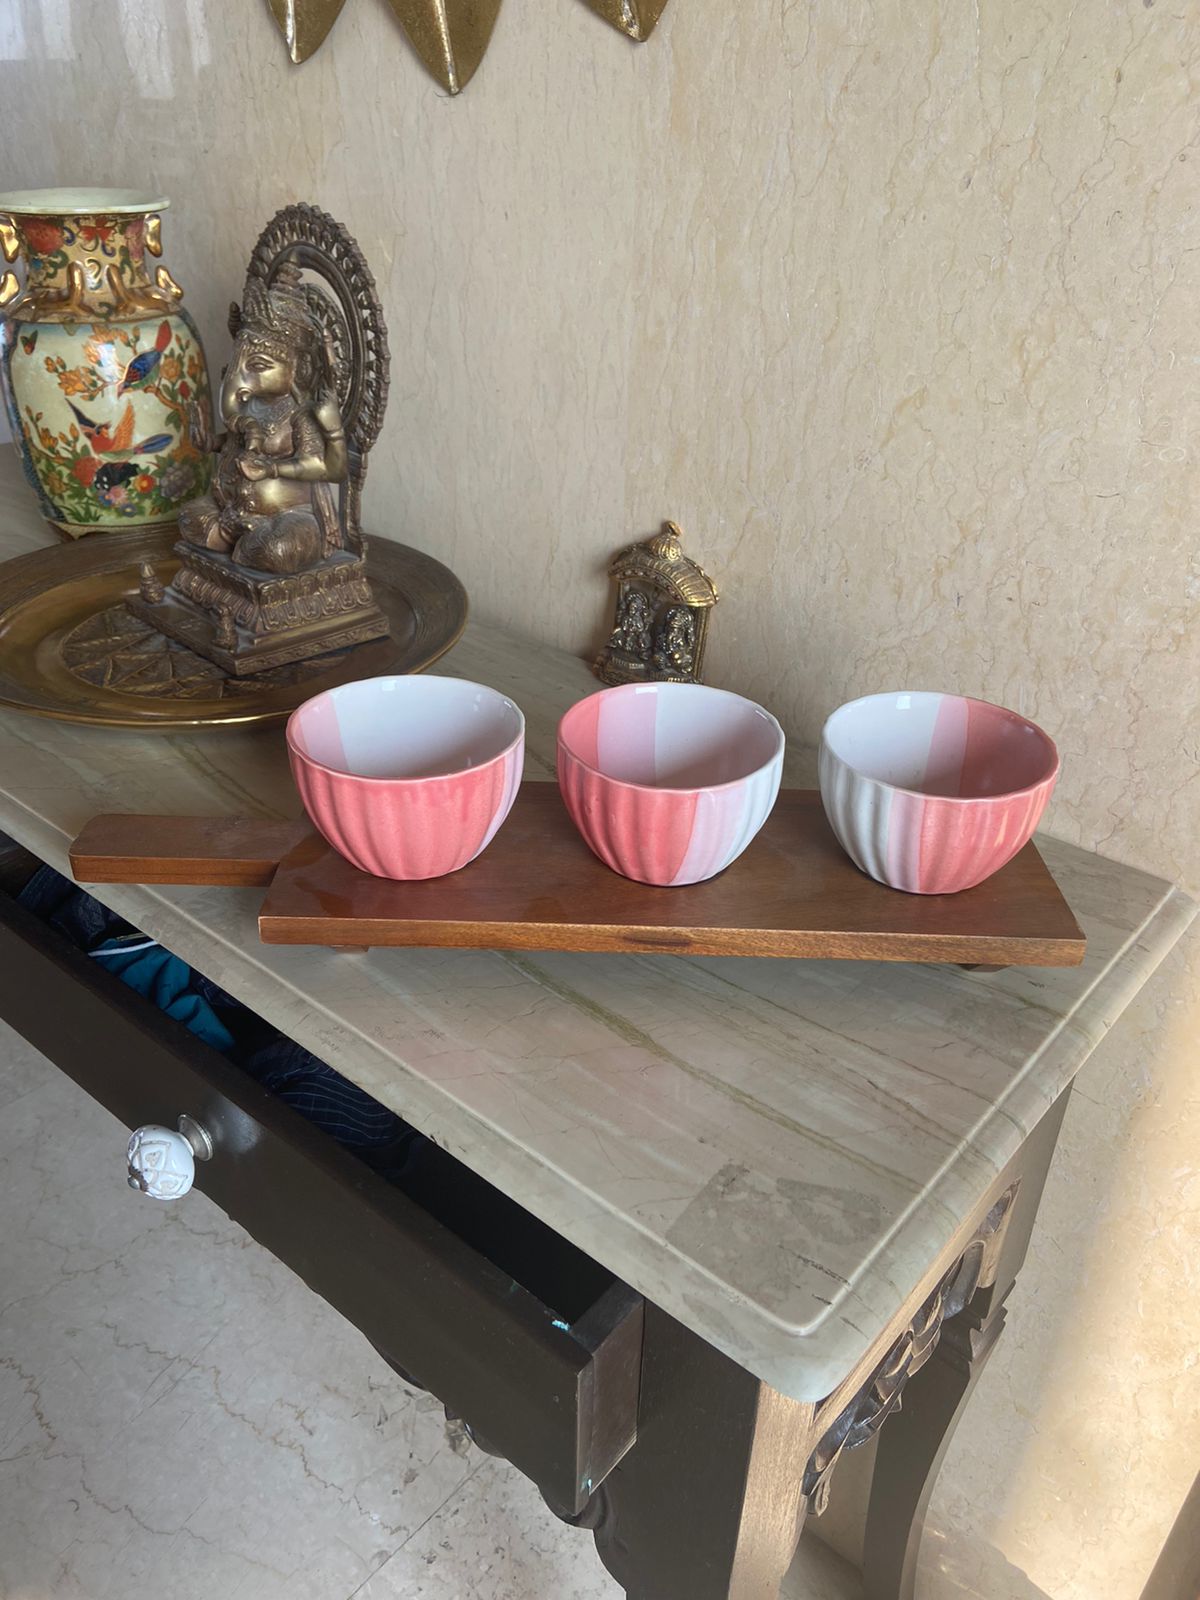 Wooden tray with Bowls l Serving bowl l Fruit bowl l Decorative bowl l Salad bowl l